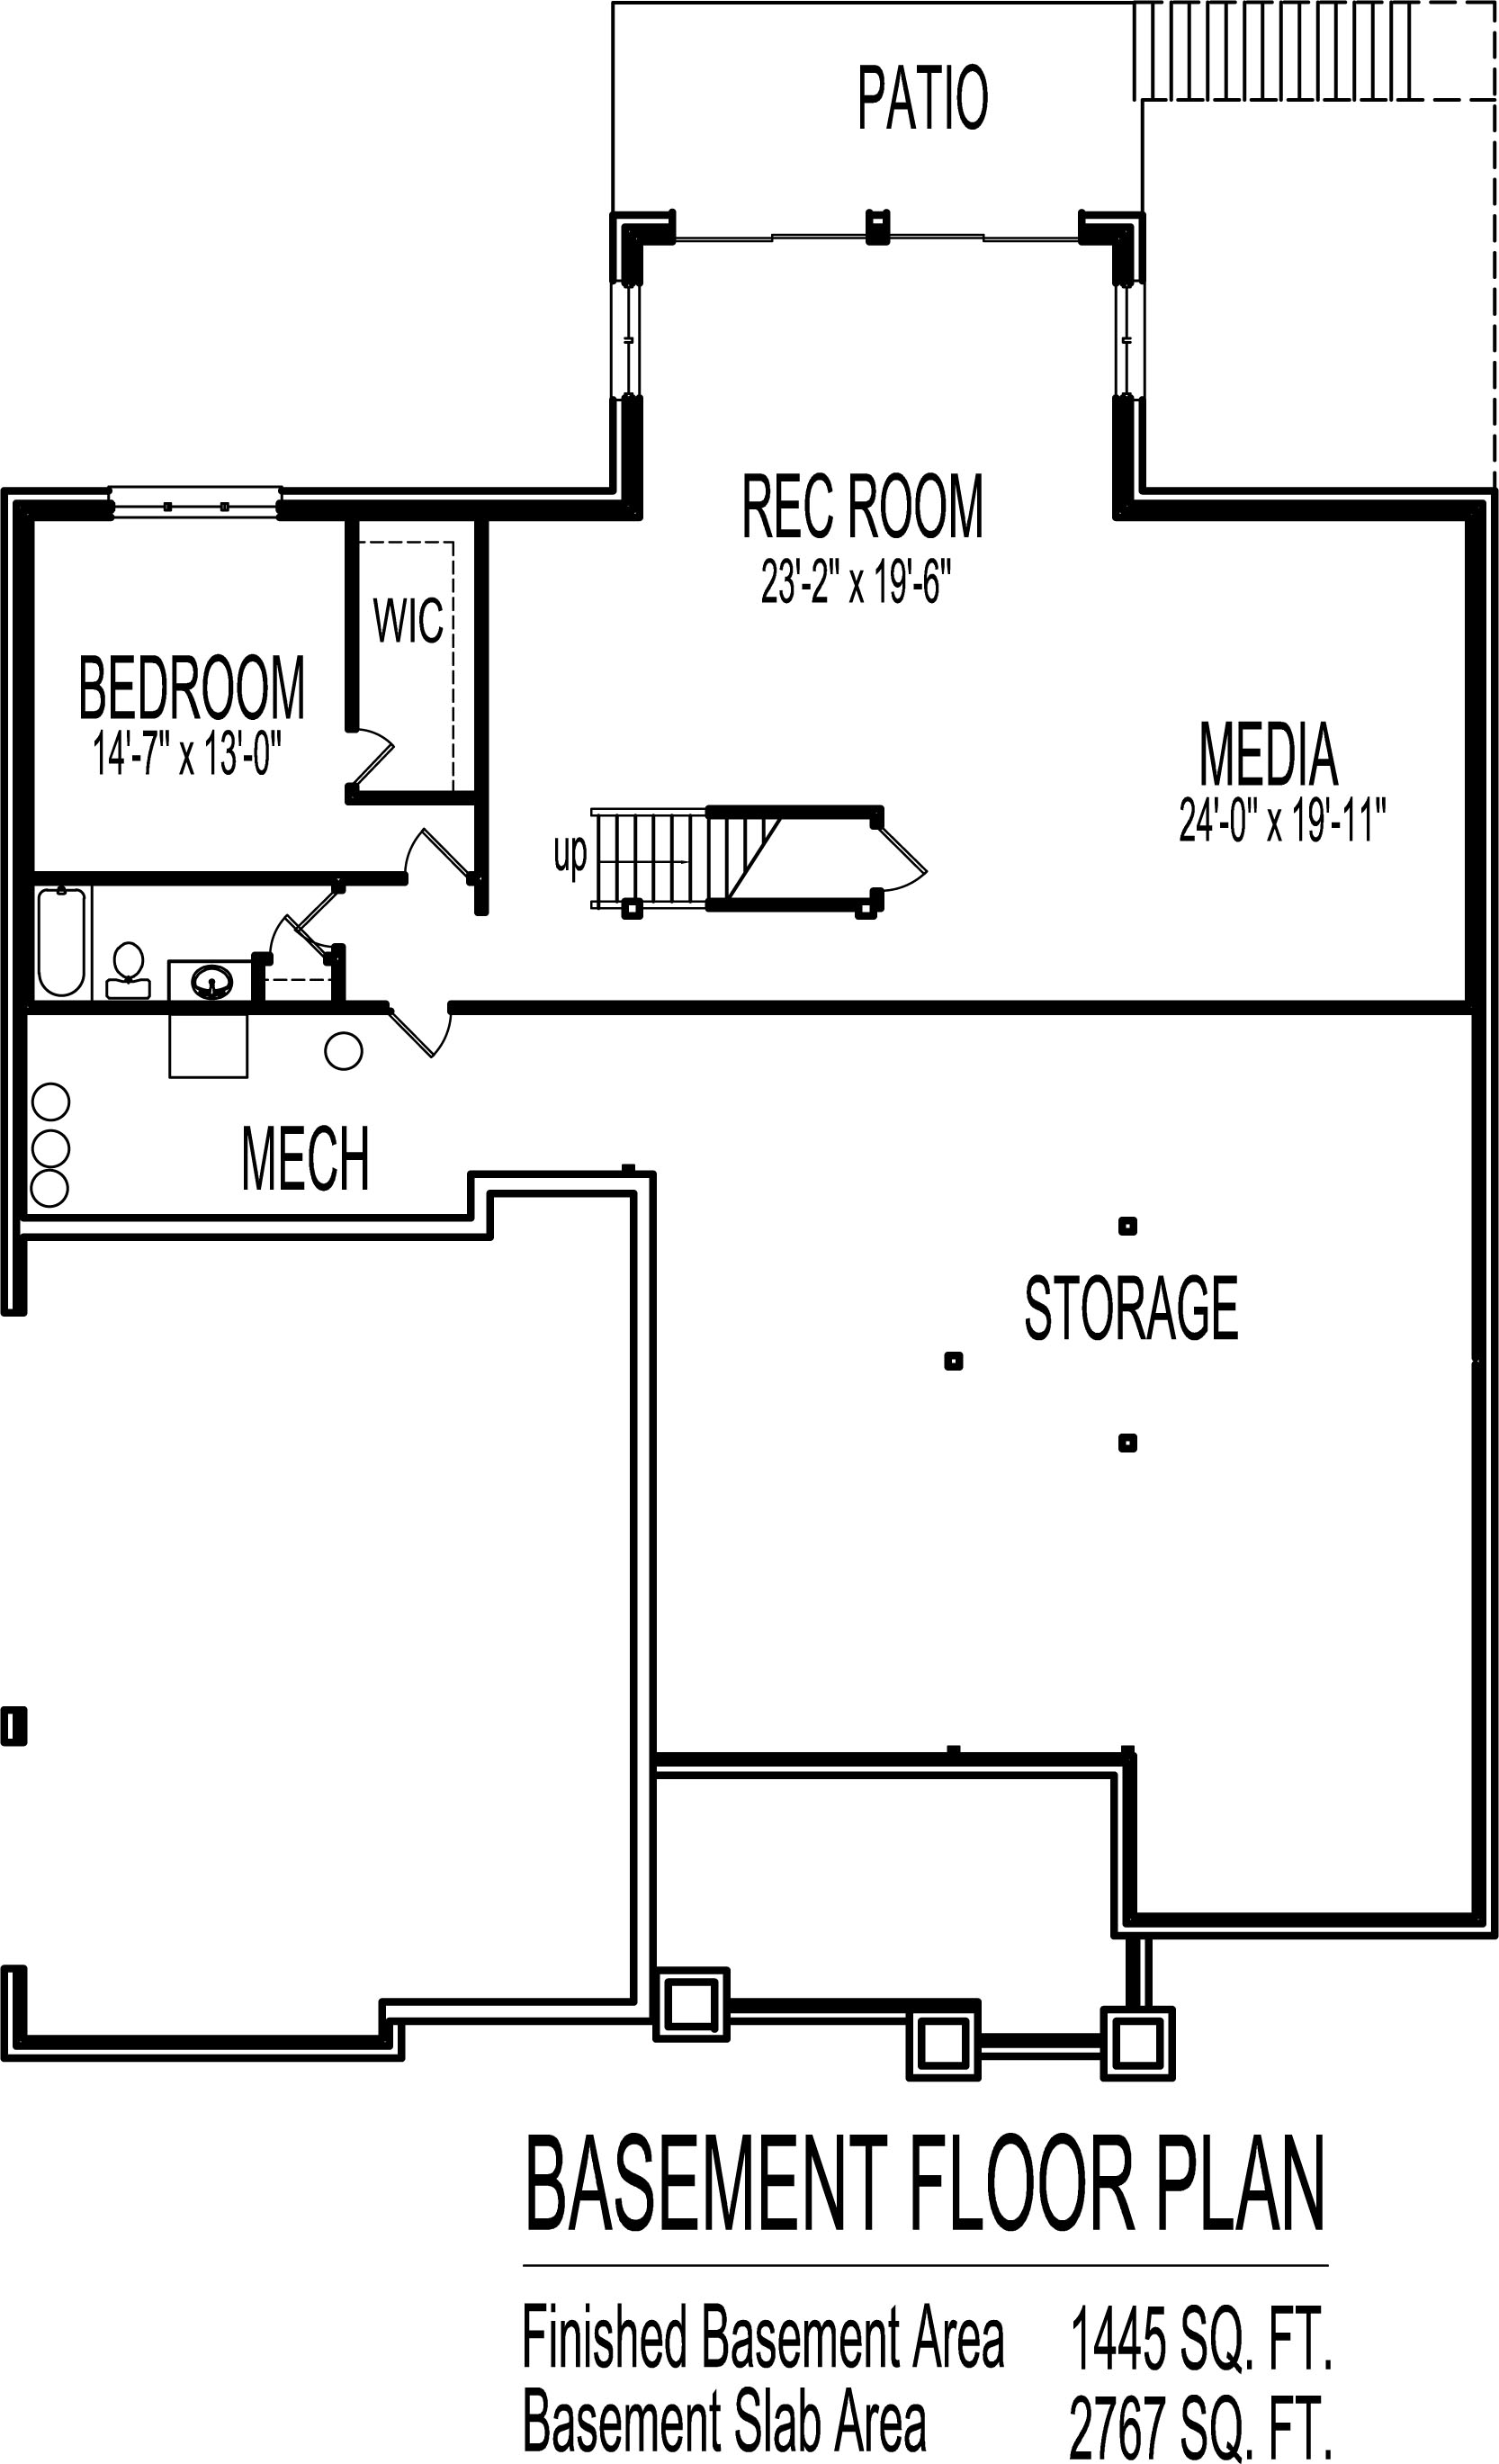 3 Bedroom Bungalow House Floor Plans Designs Single Story Blueprint Drawings